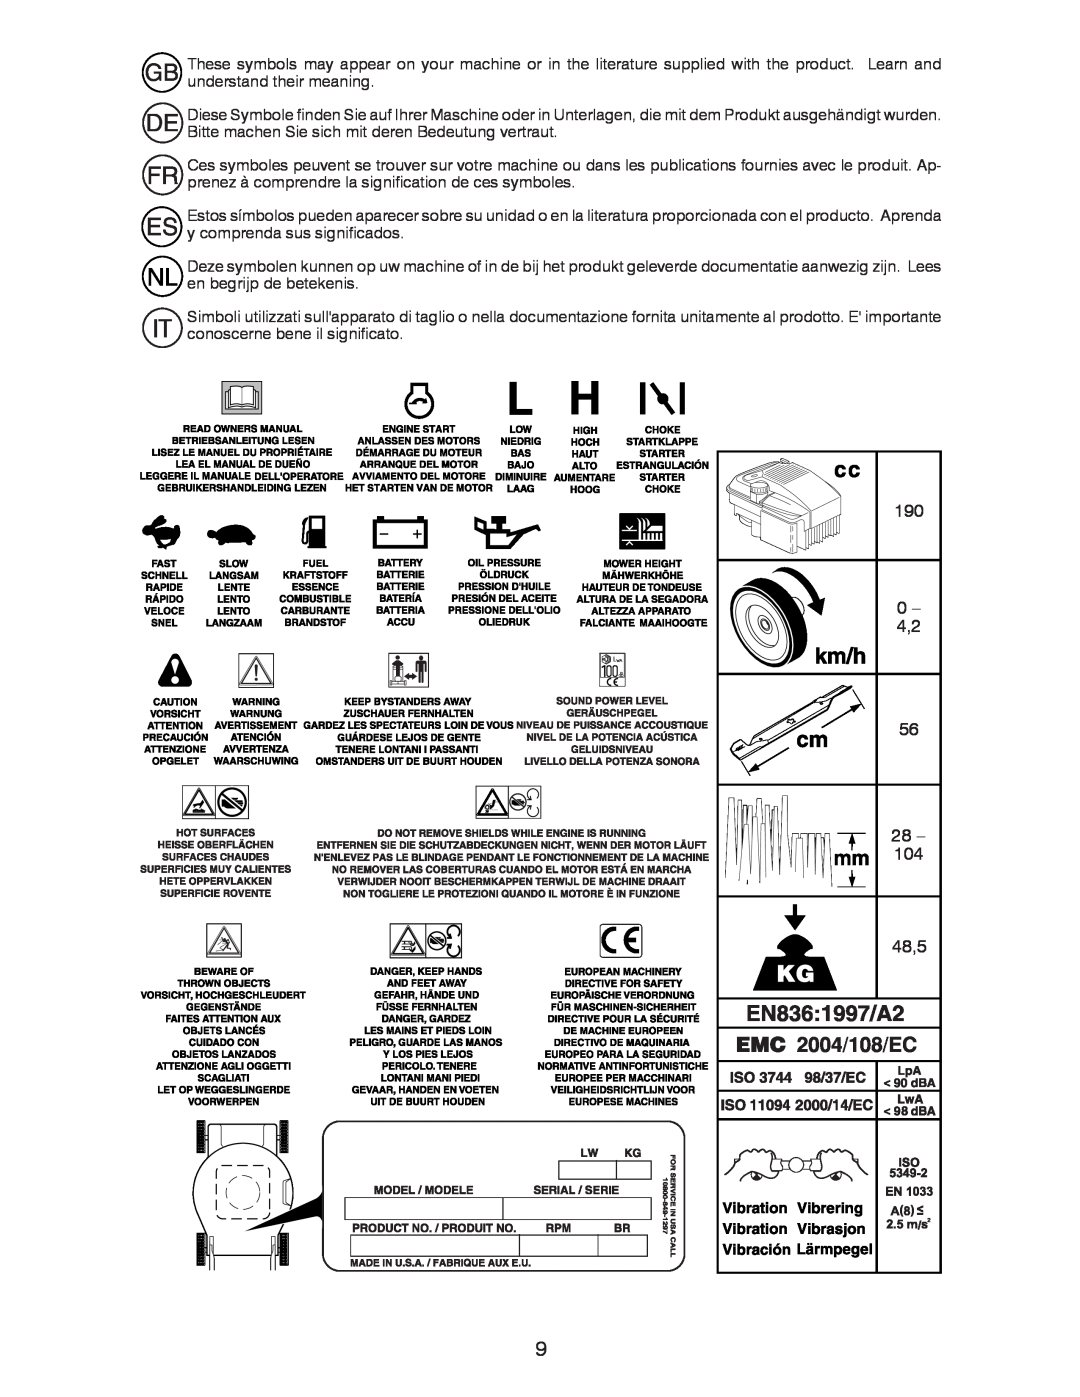 Husqvarna J 55S L instruction manual 48,5 